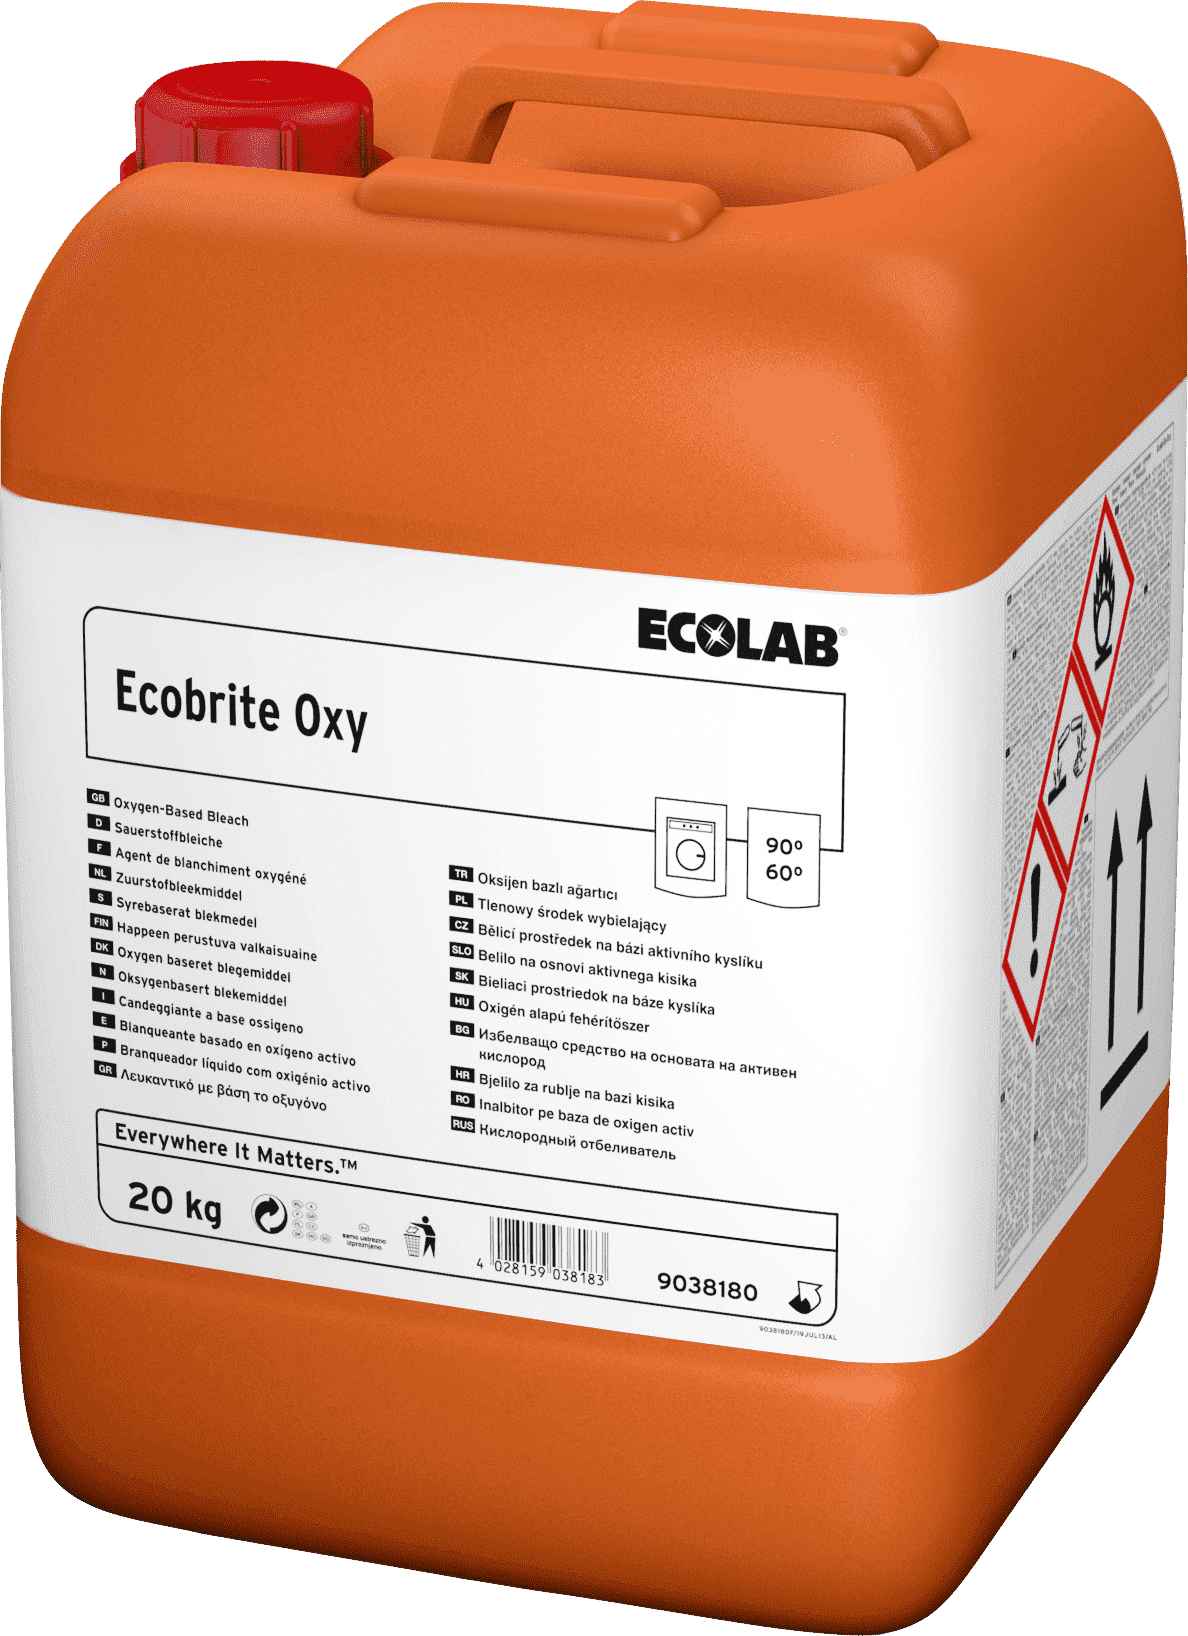 Ecolab Ecobrite Oxy кислородный отбеливатель, Клингард